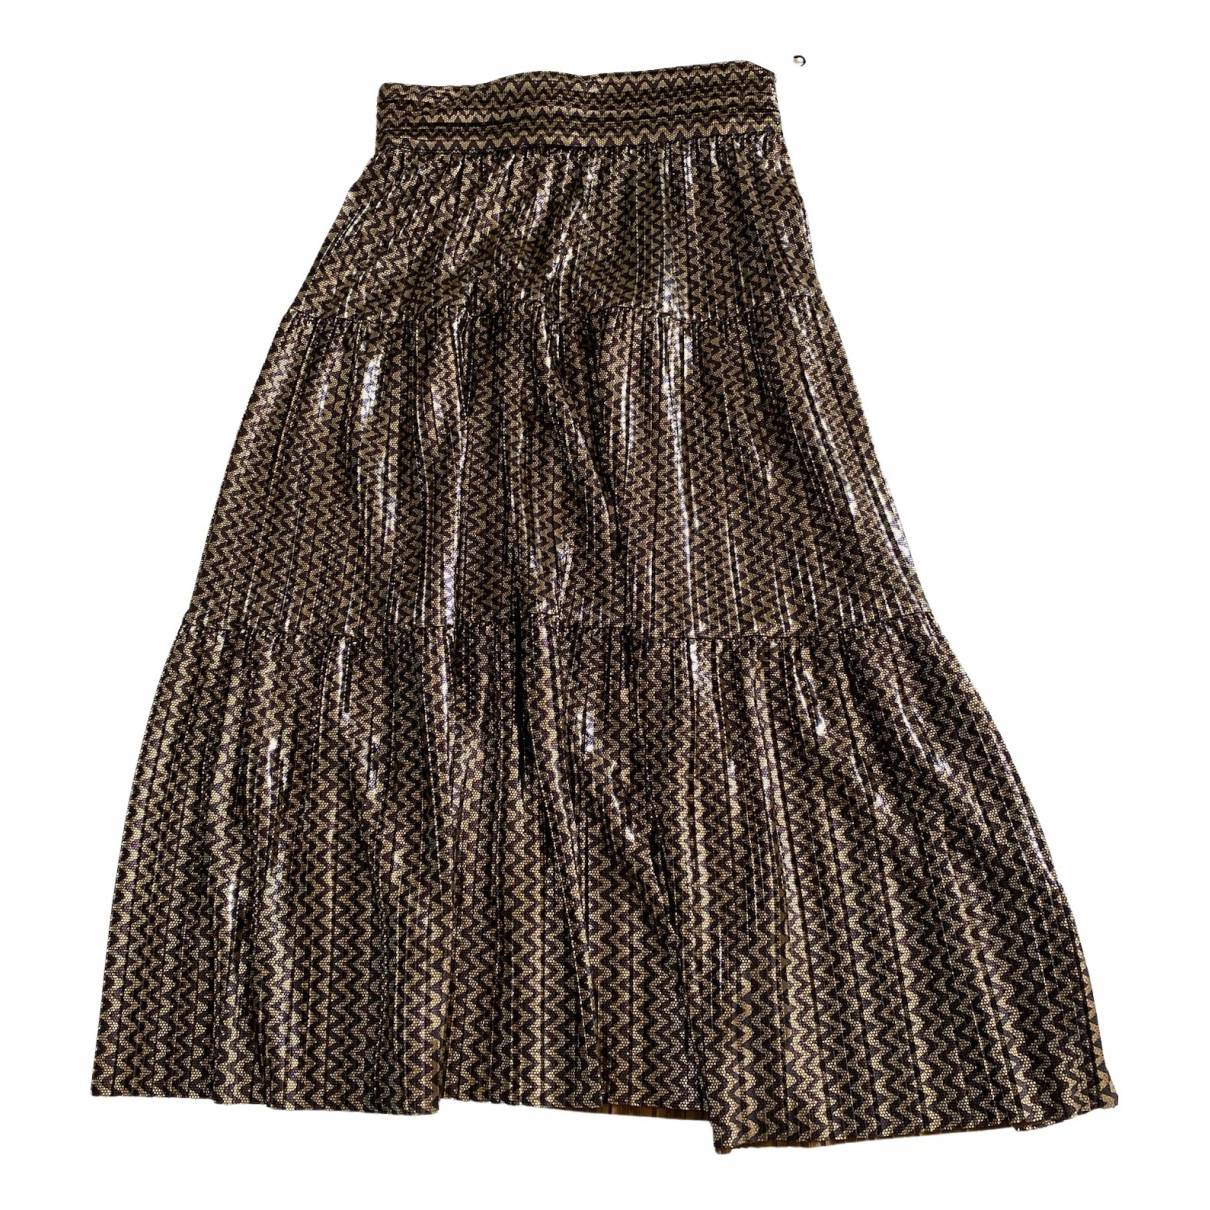 ba&sh Skirt - Metallic Gold Maxi Skirt - Size 3 - NWT